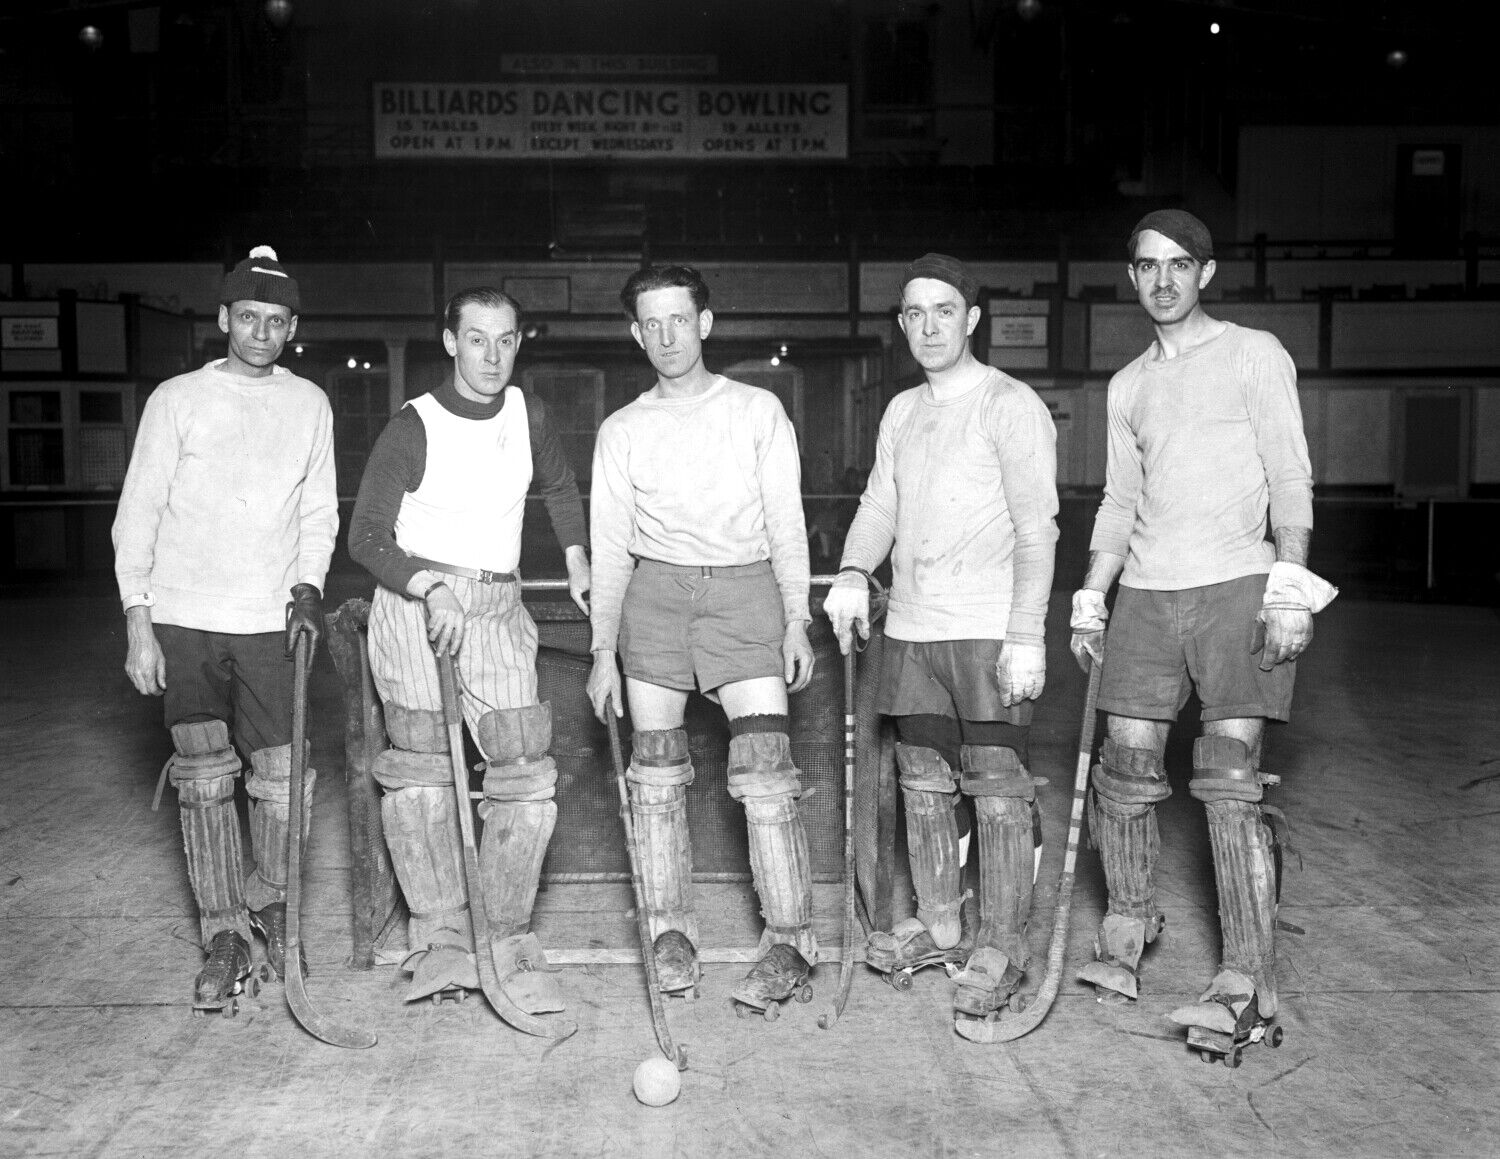 1926 Arcade Roller Hockey Club Vintage Photograph 8.5